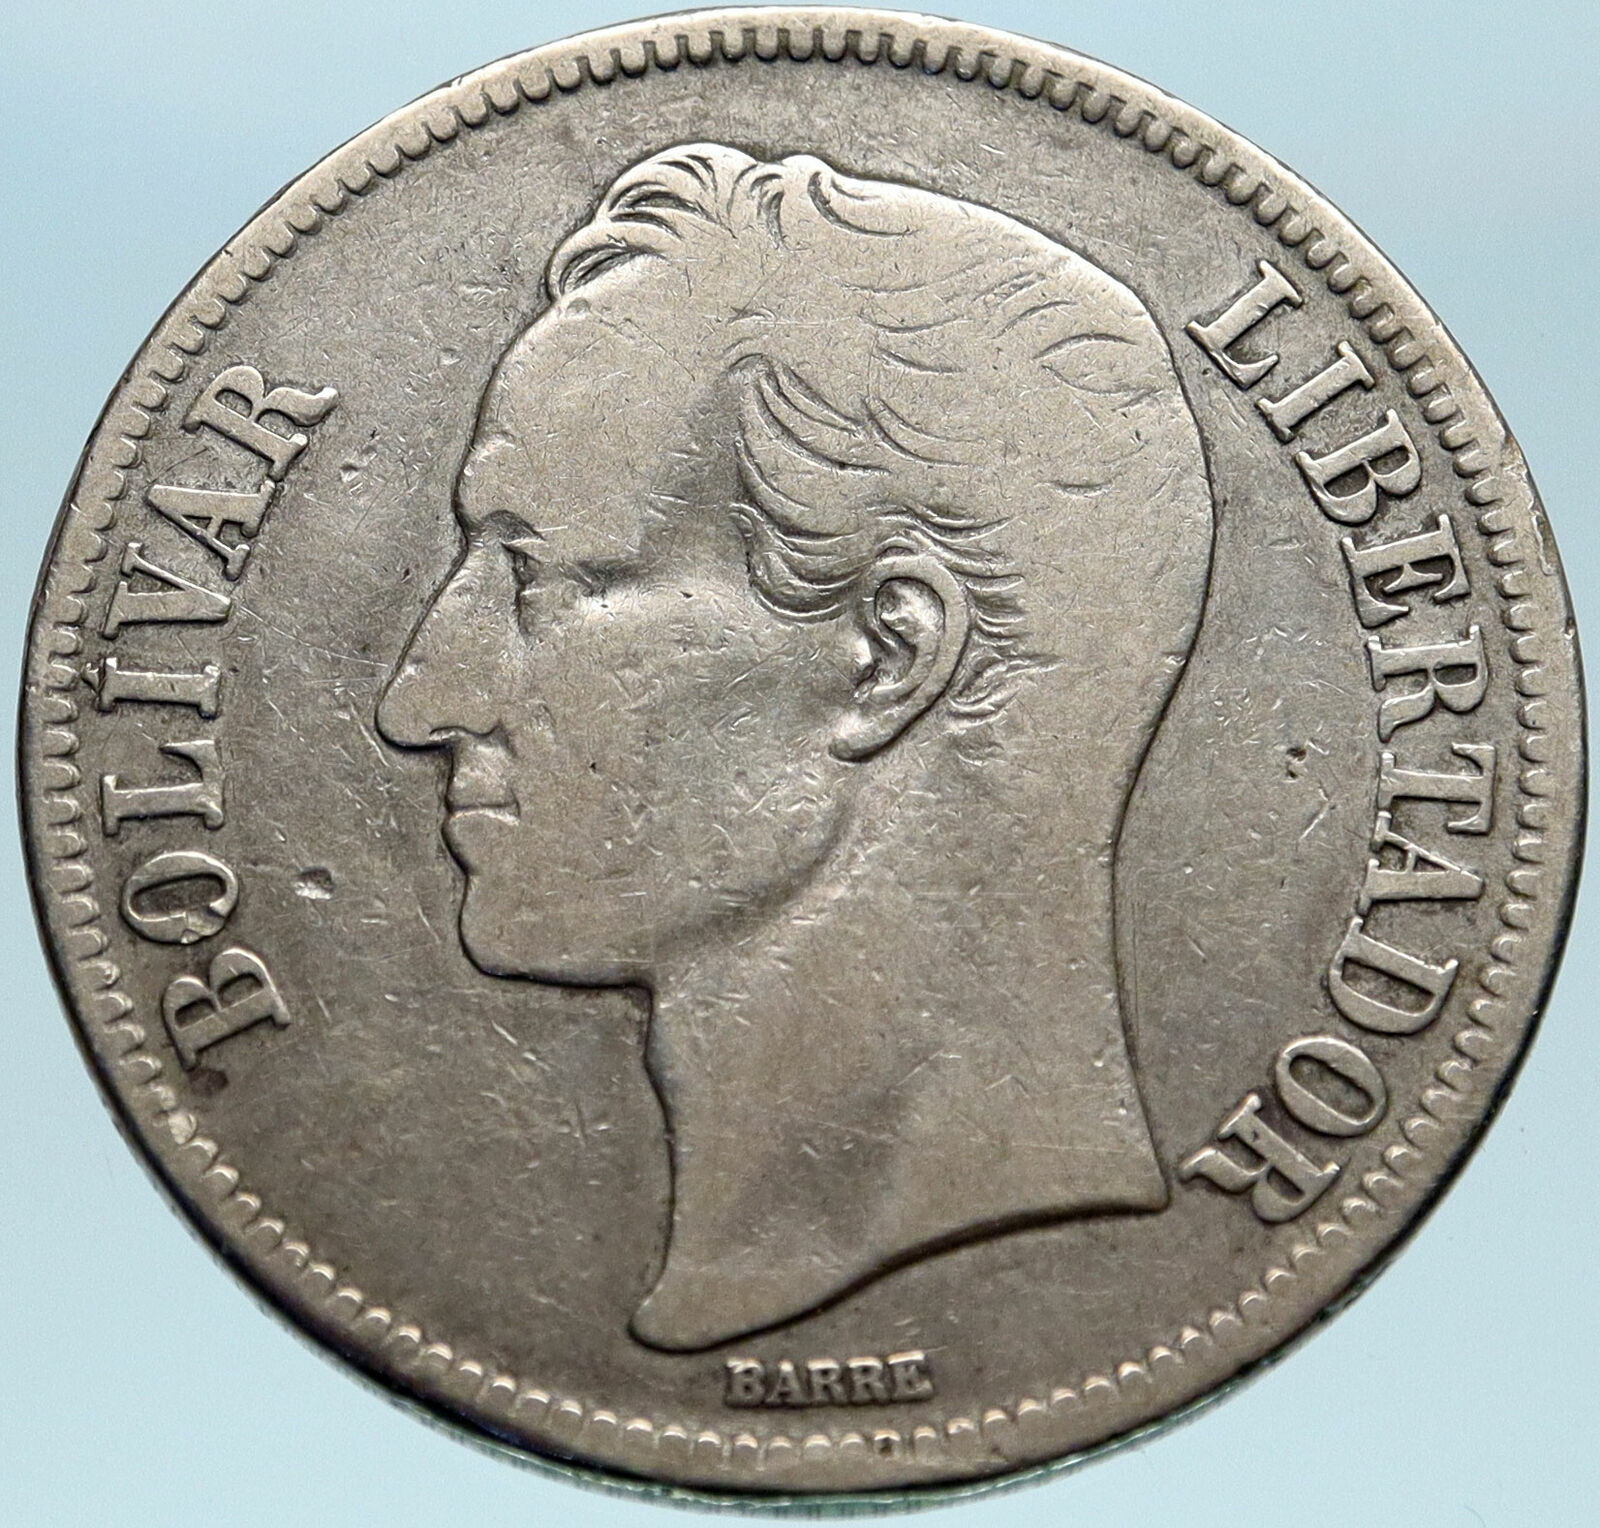 1926 Freemason President Simon Bolivar VENEZUELA Founder Silver 5 B Coin i82798